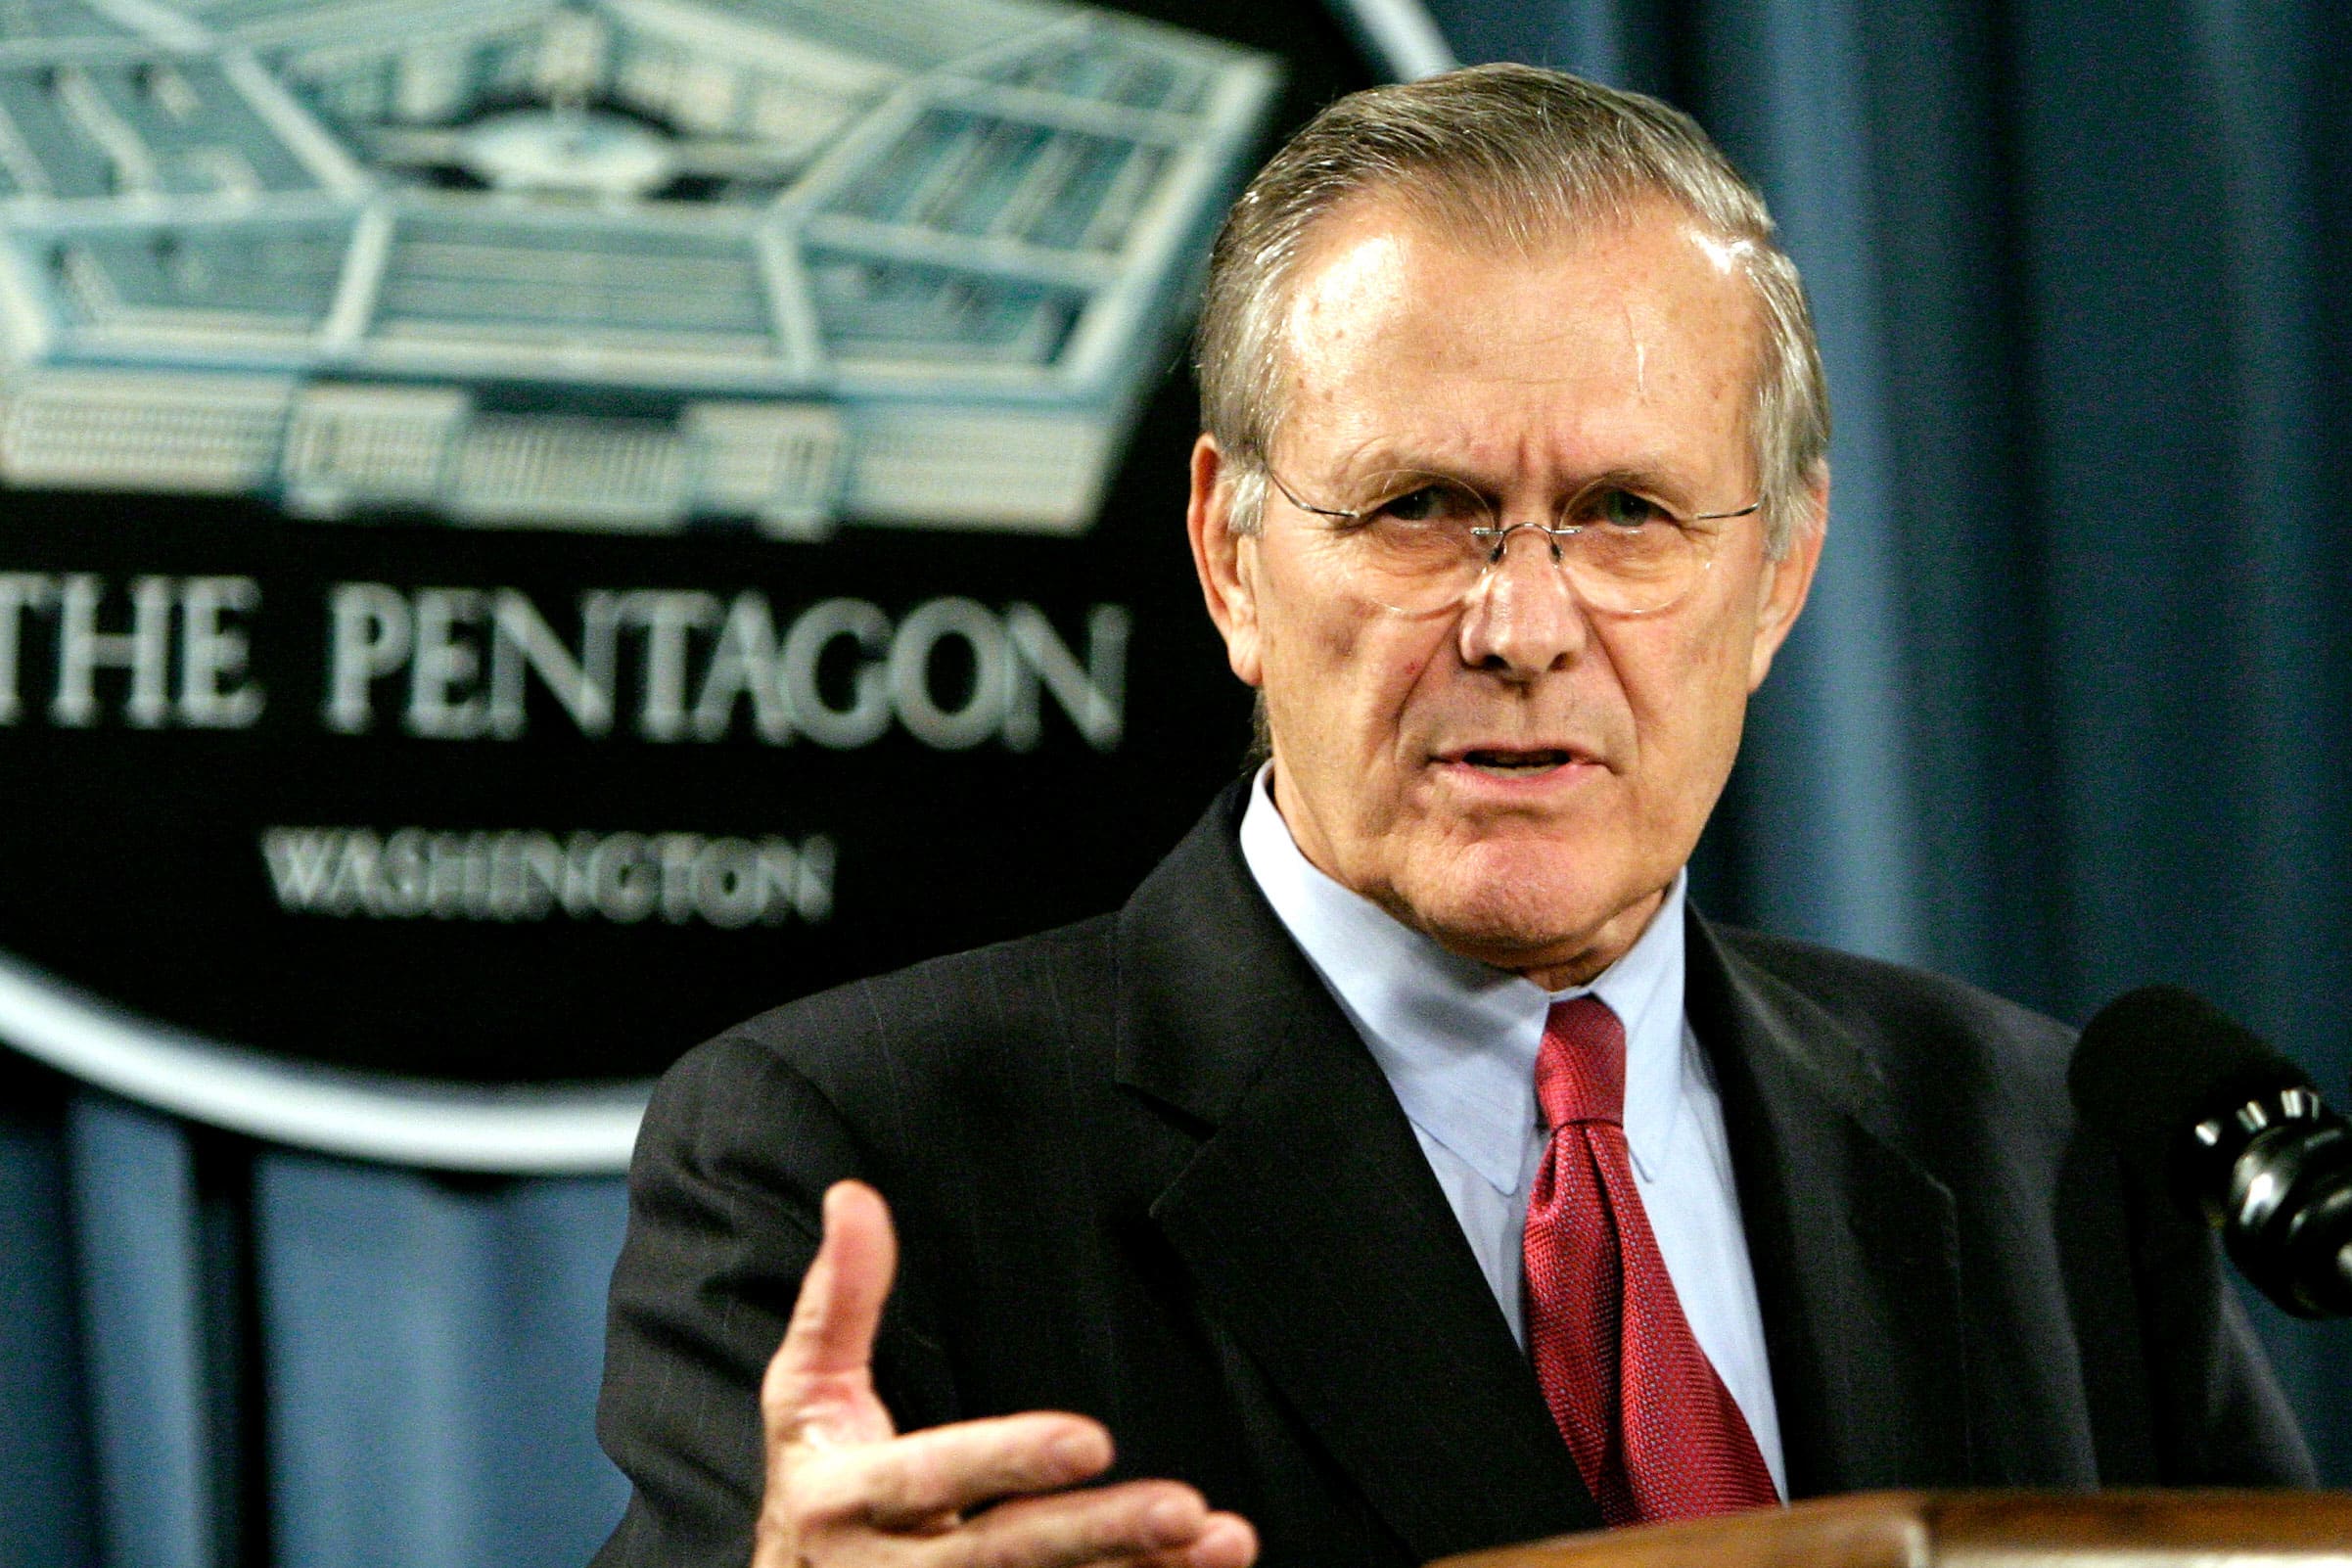 Former Defense Secretary Donald Rumsfeld, who oversaw Iraq war, dies at 88 - CNBC